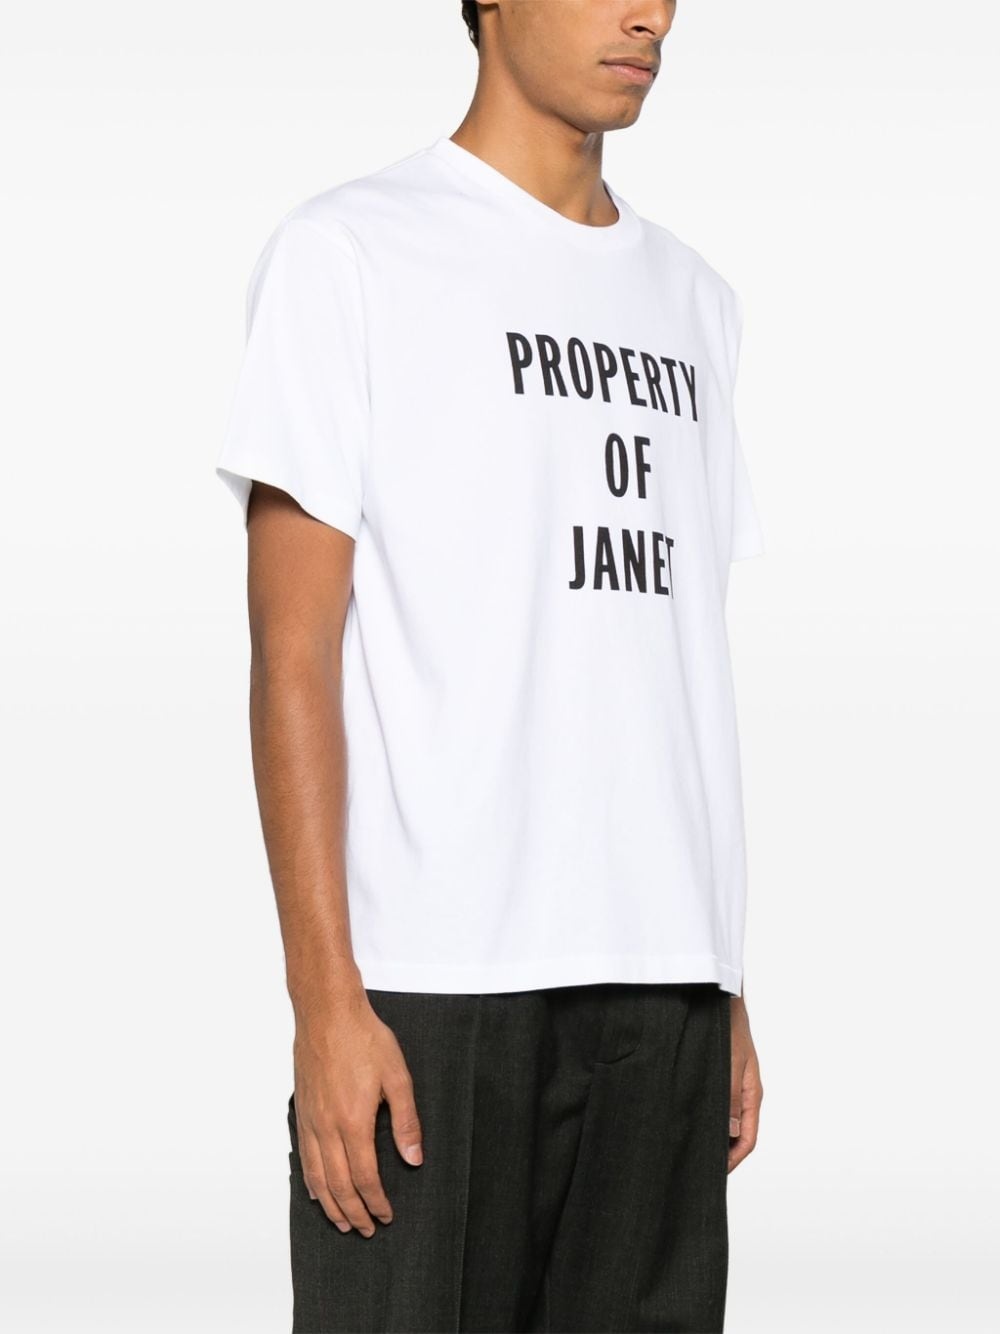 Janet cotton T-shirt - 3